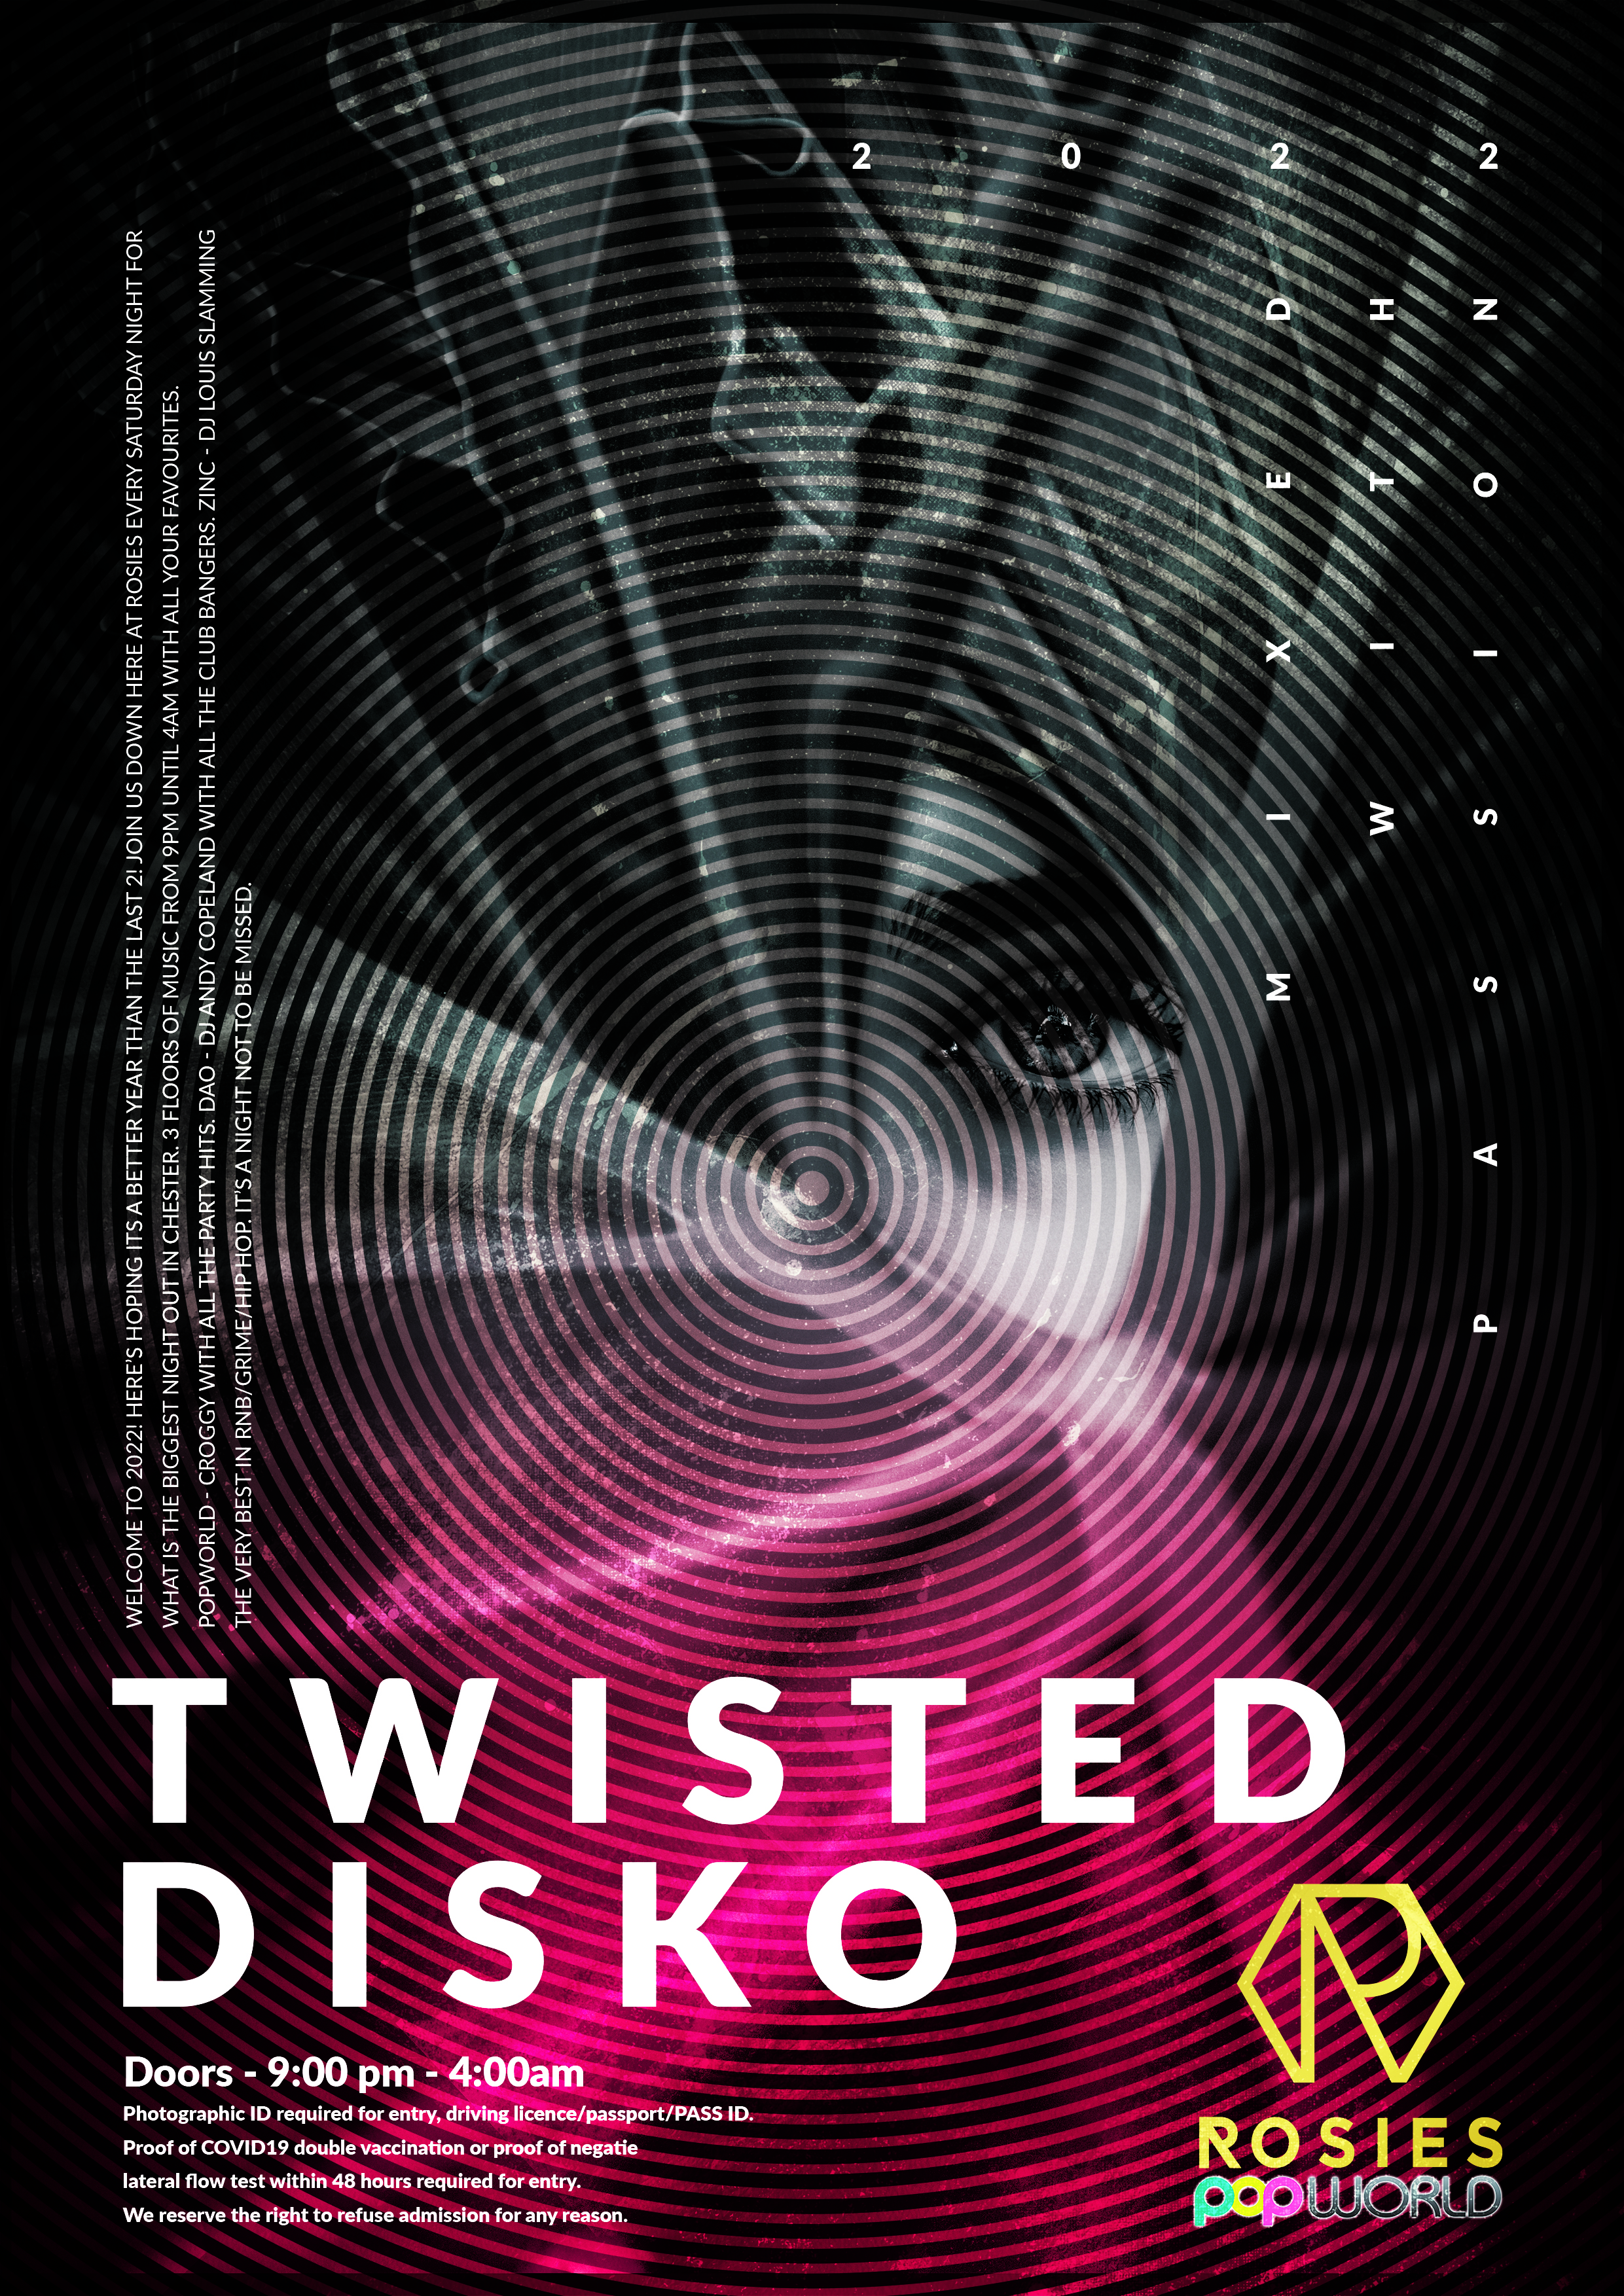 Twisted Disko